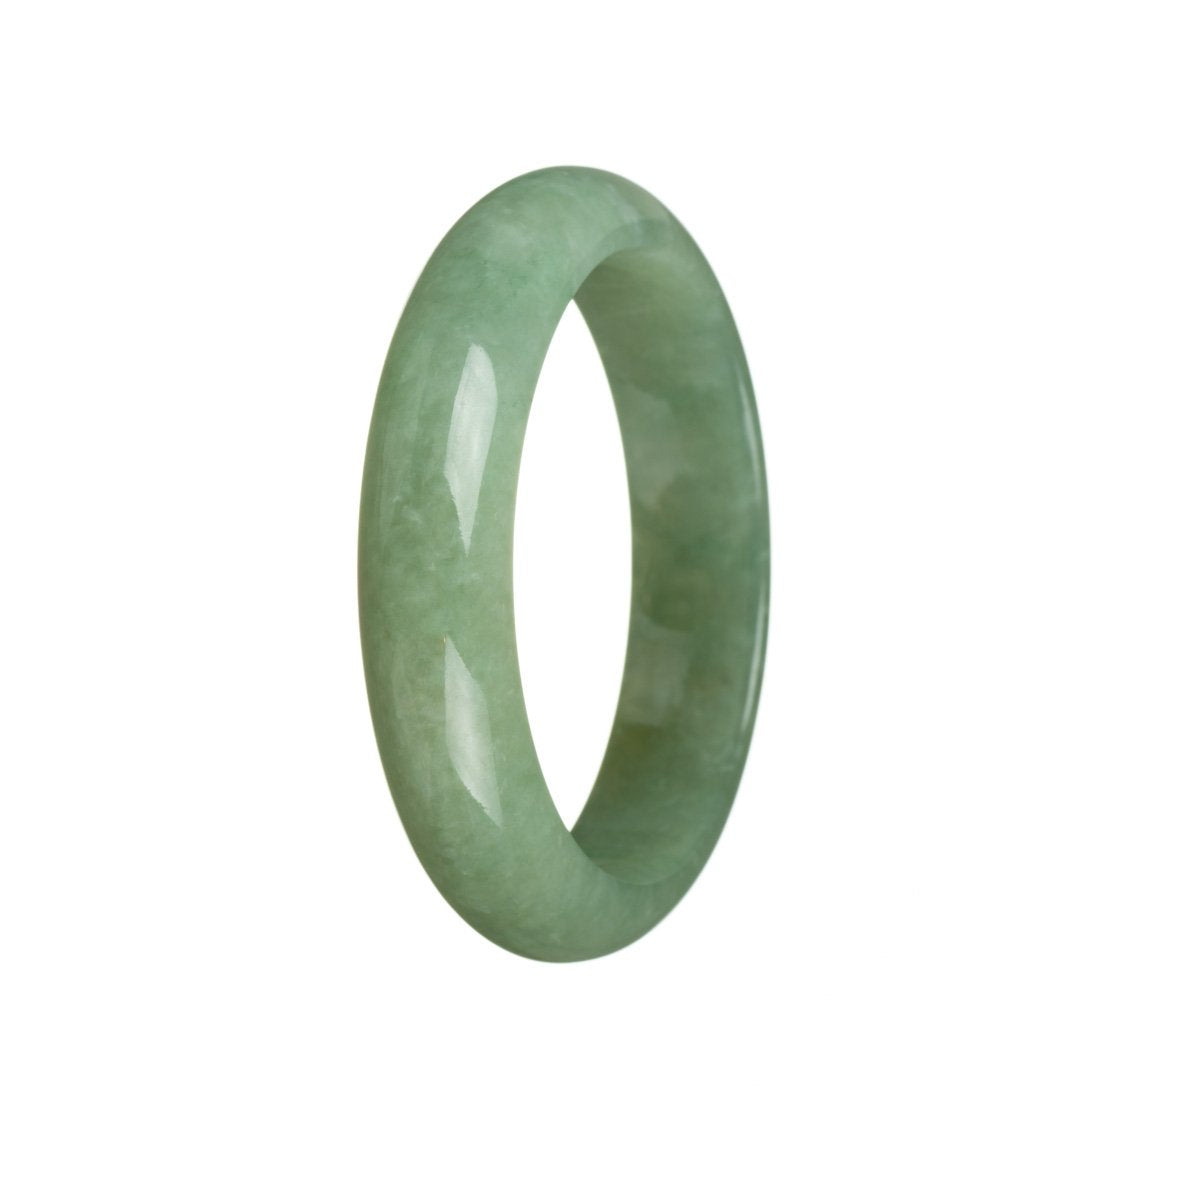 A half moon-shaped bangle made of genuine, untreated green Burma jade, measuring 55mm in diameter.